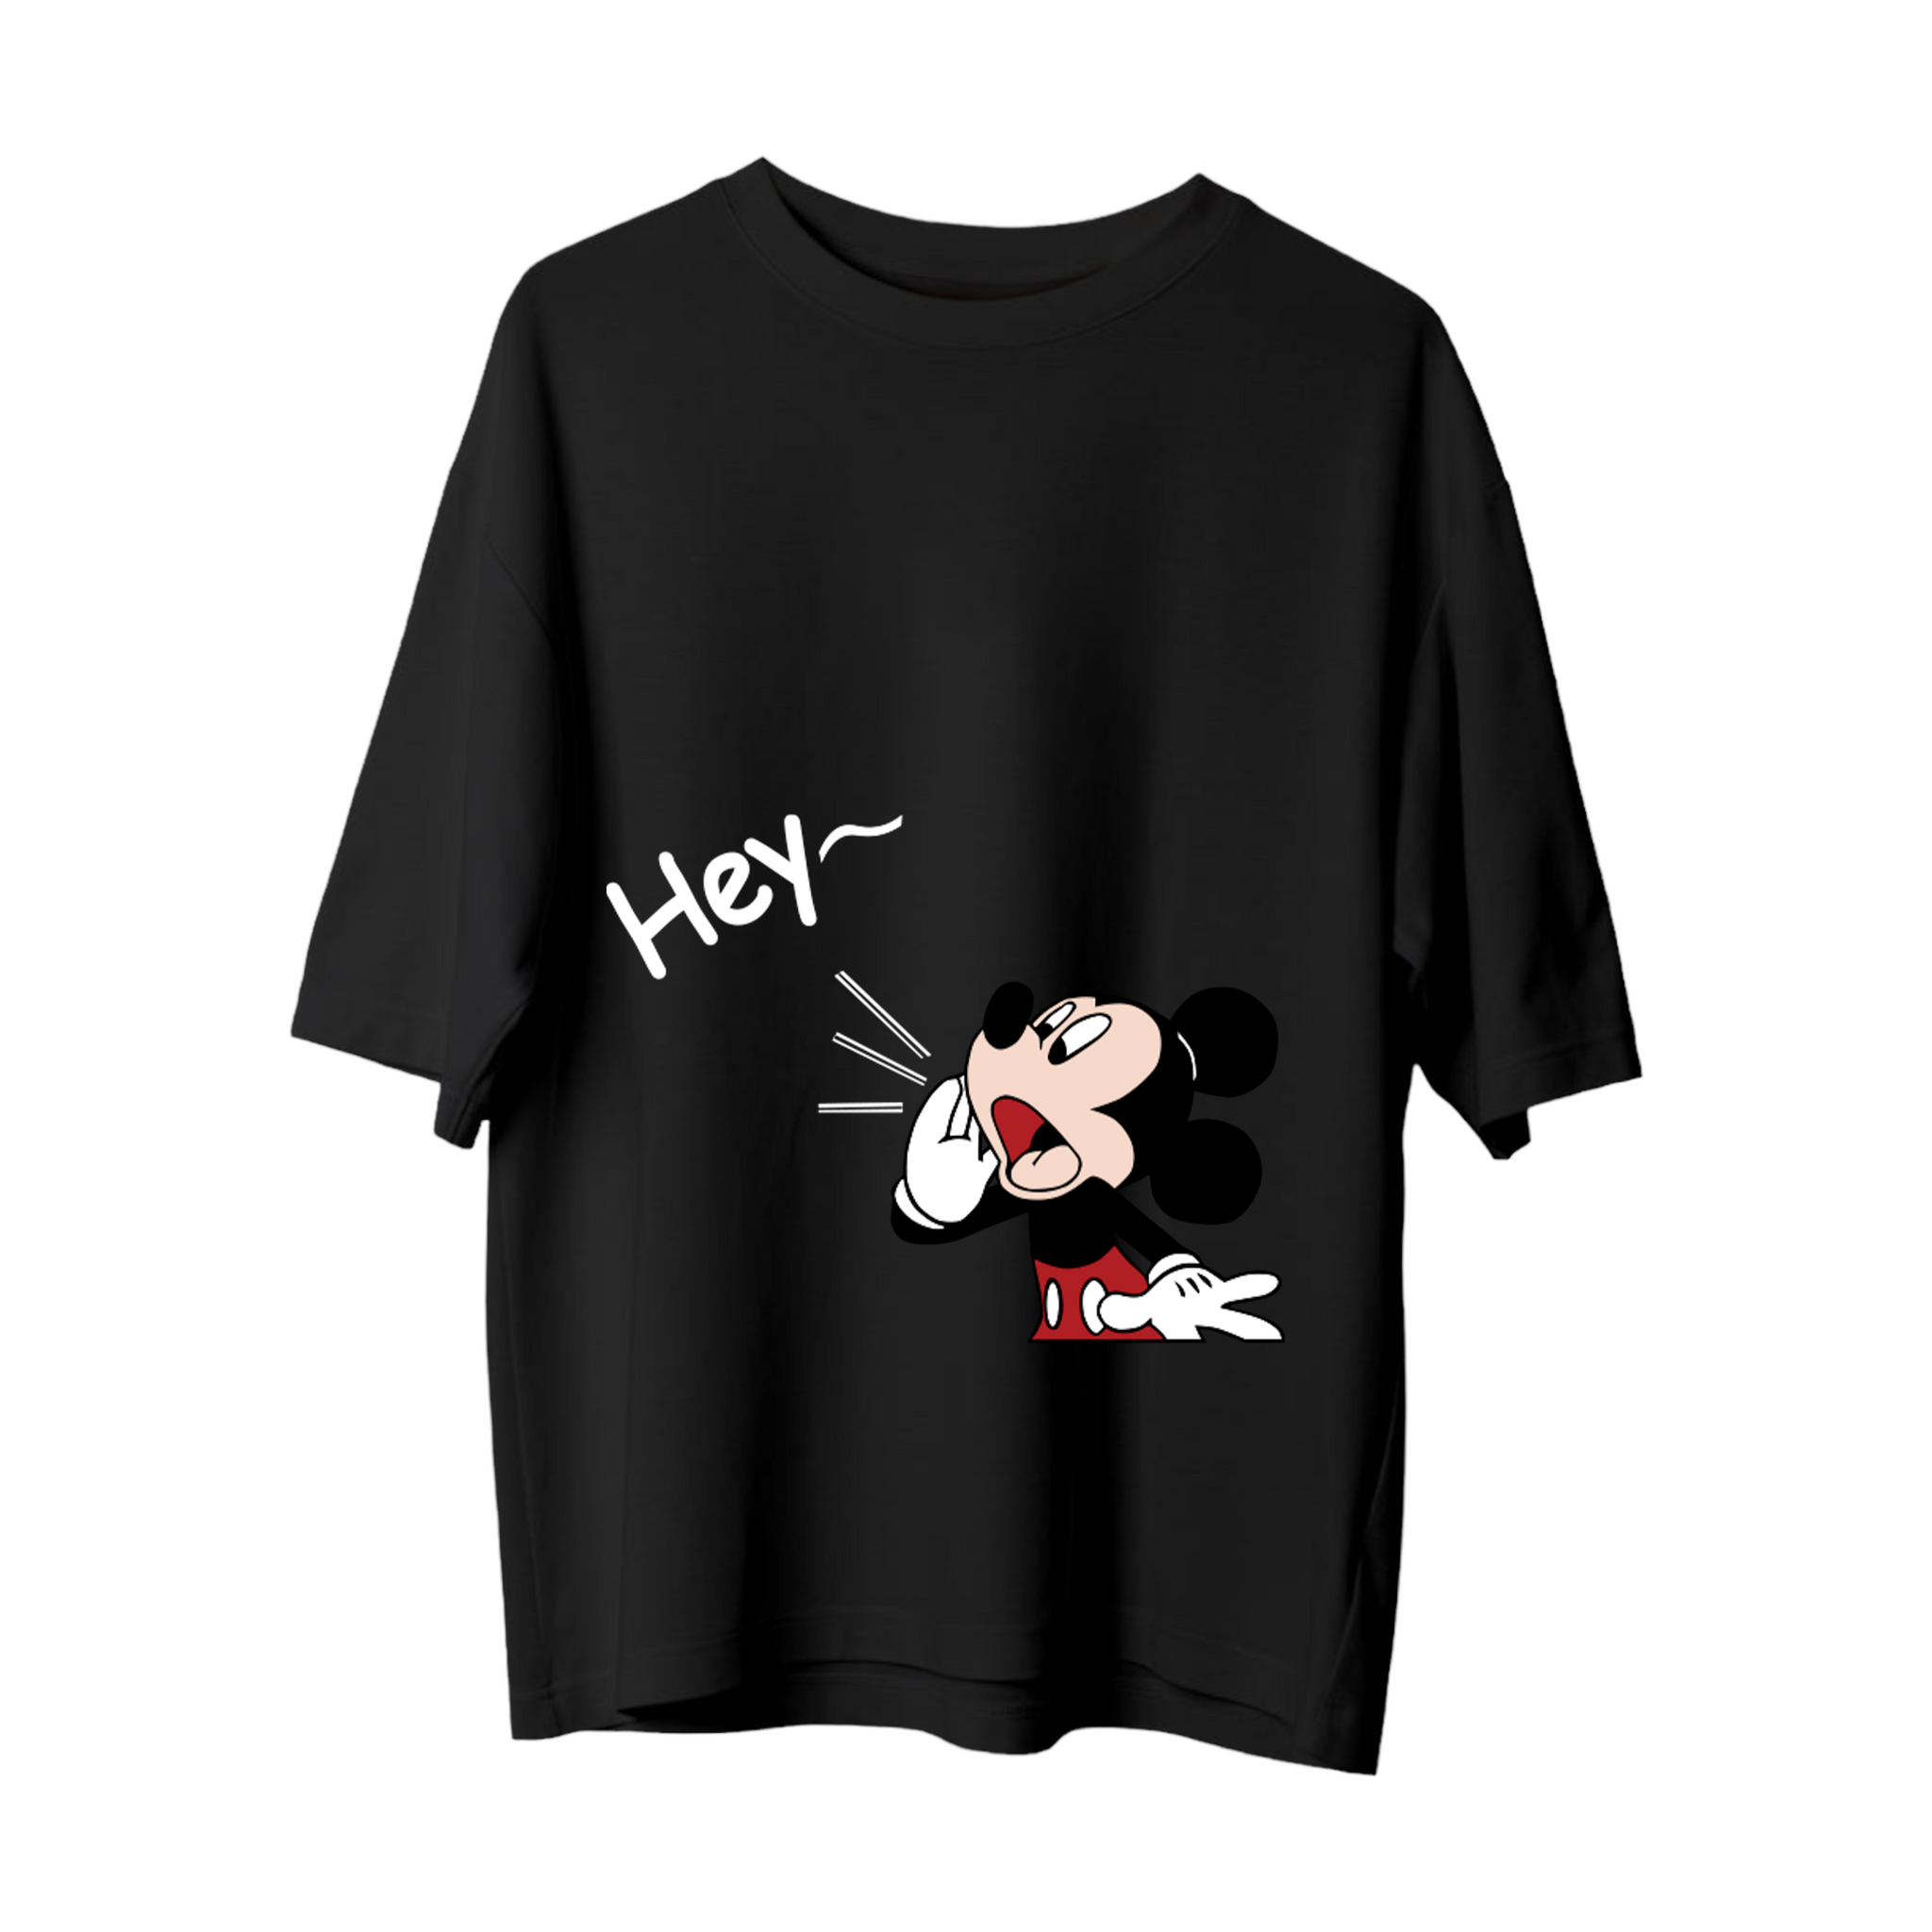 Hey Mickey - Oversize T-Shirt